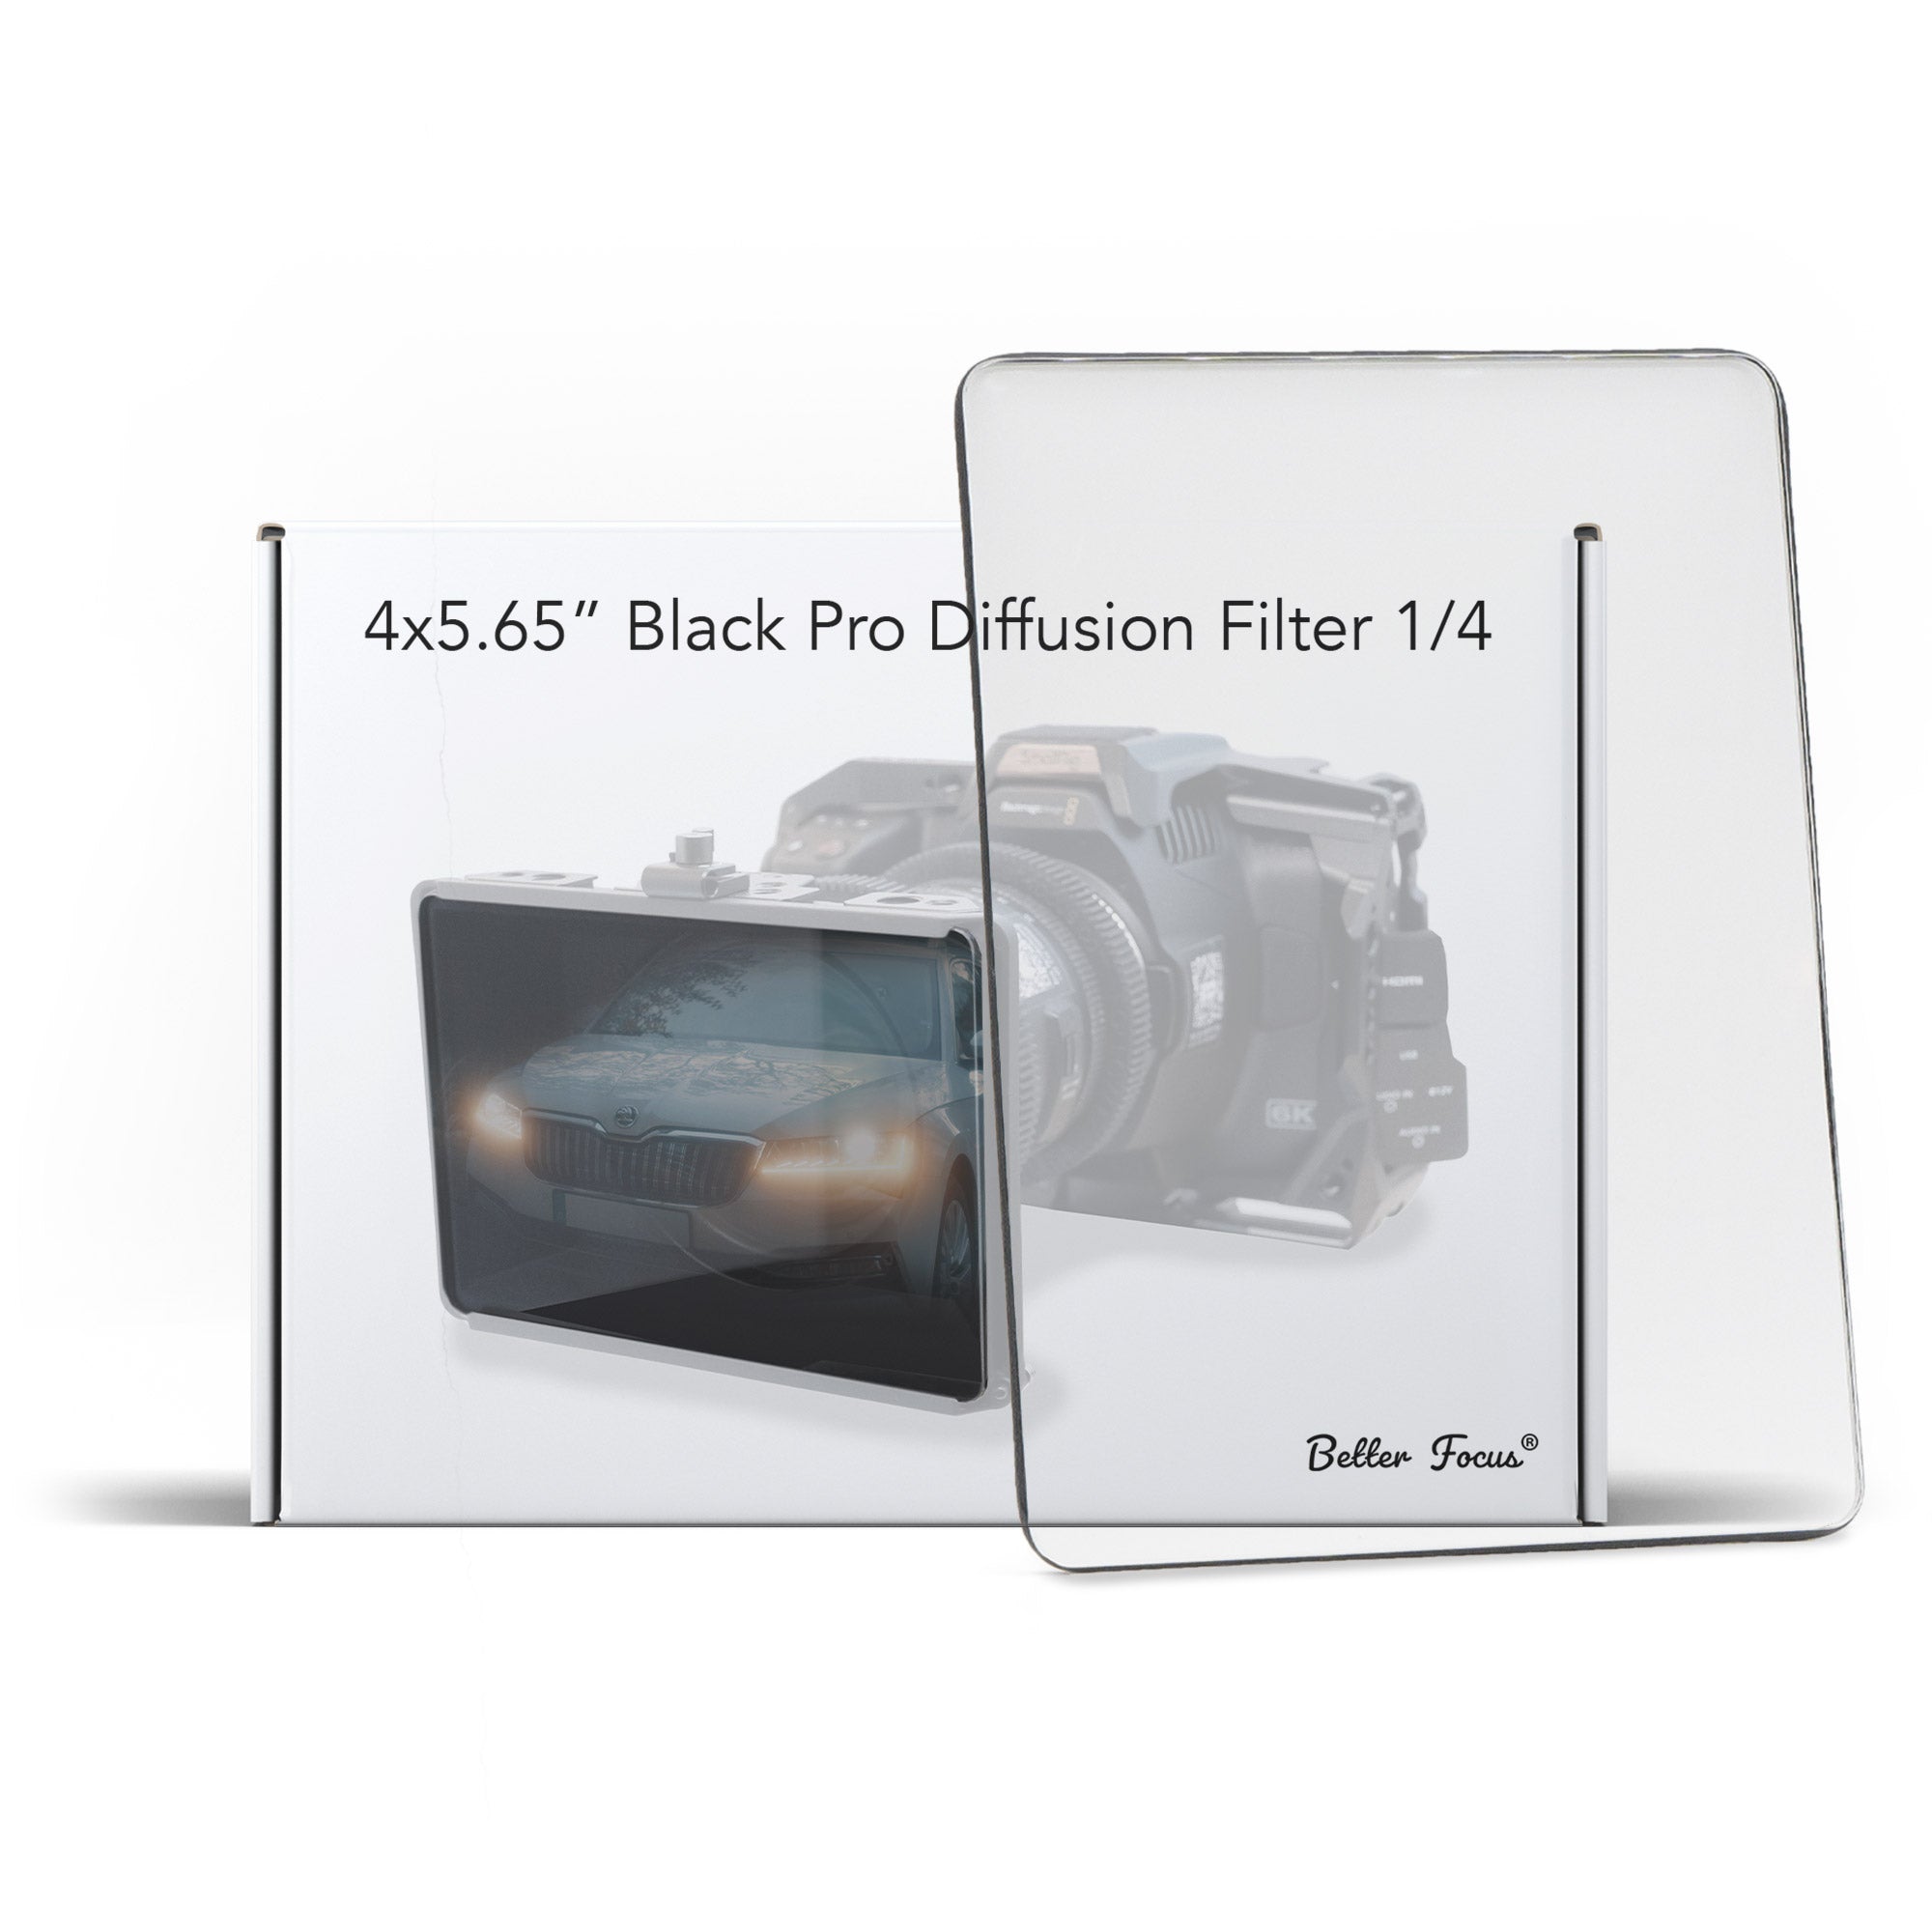 Black Diffusion Cinema Filter 1/4 & 1/8 Pro Mist Effect